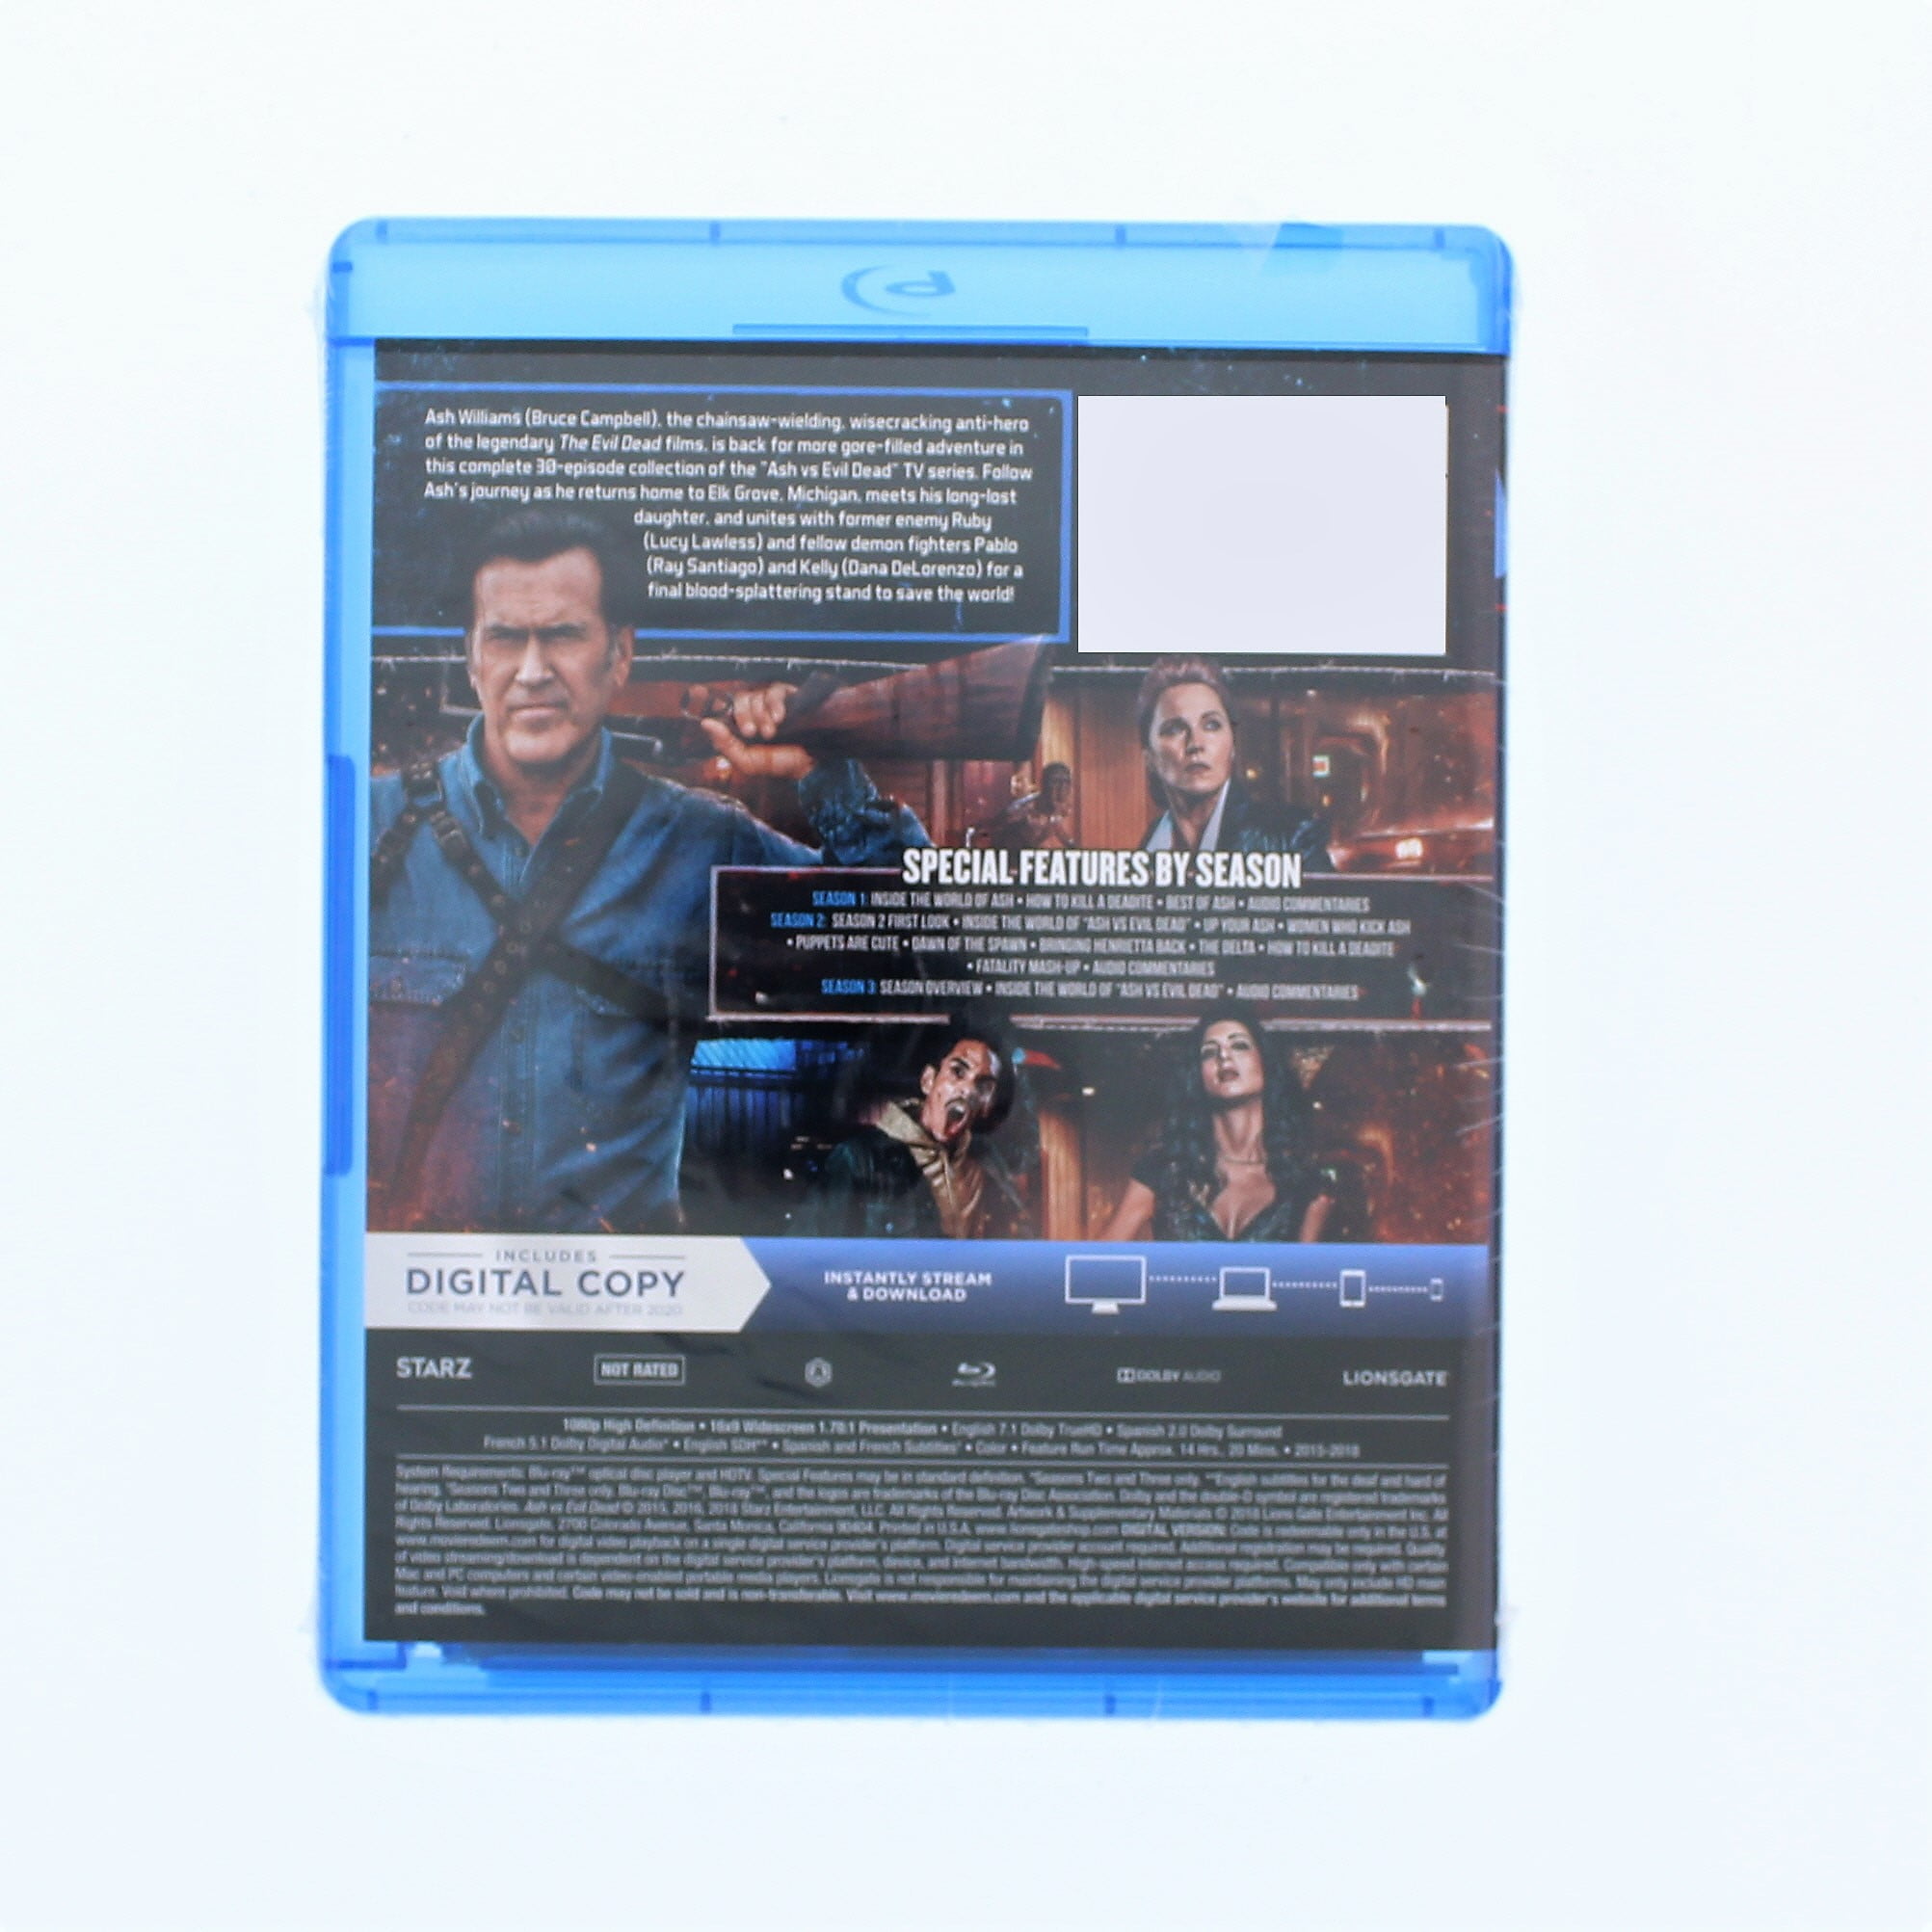 Ash vs. Evil Dead Season 1-3 TV Series Blu-ray 4 Disc BD All Region English  Box